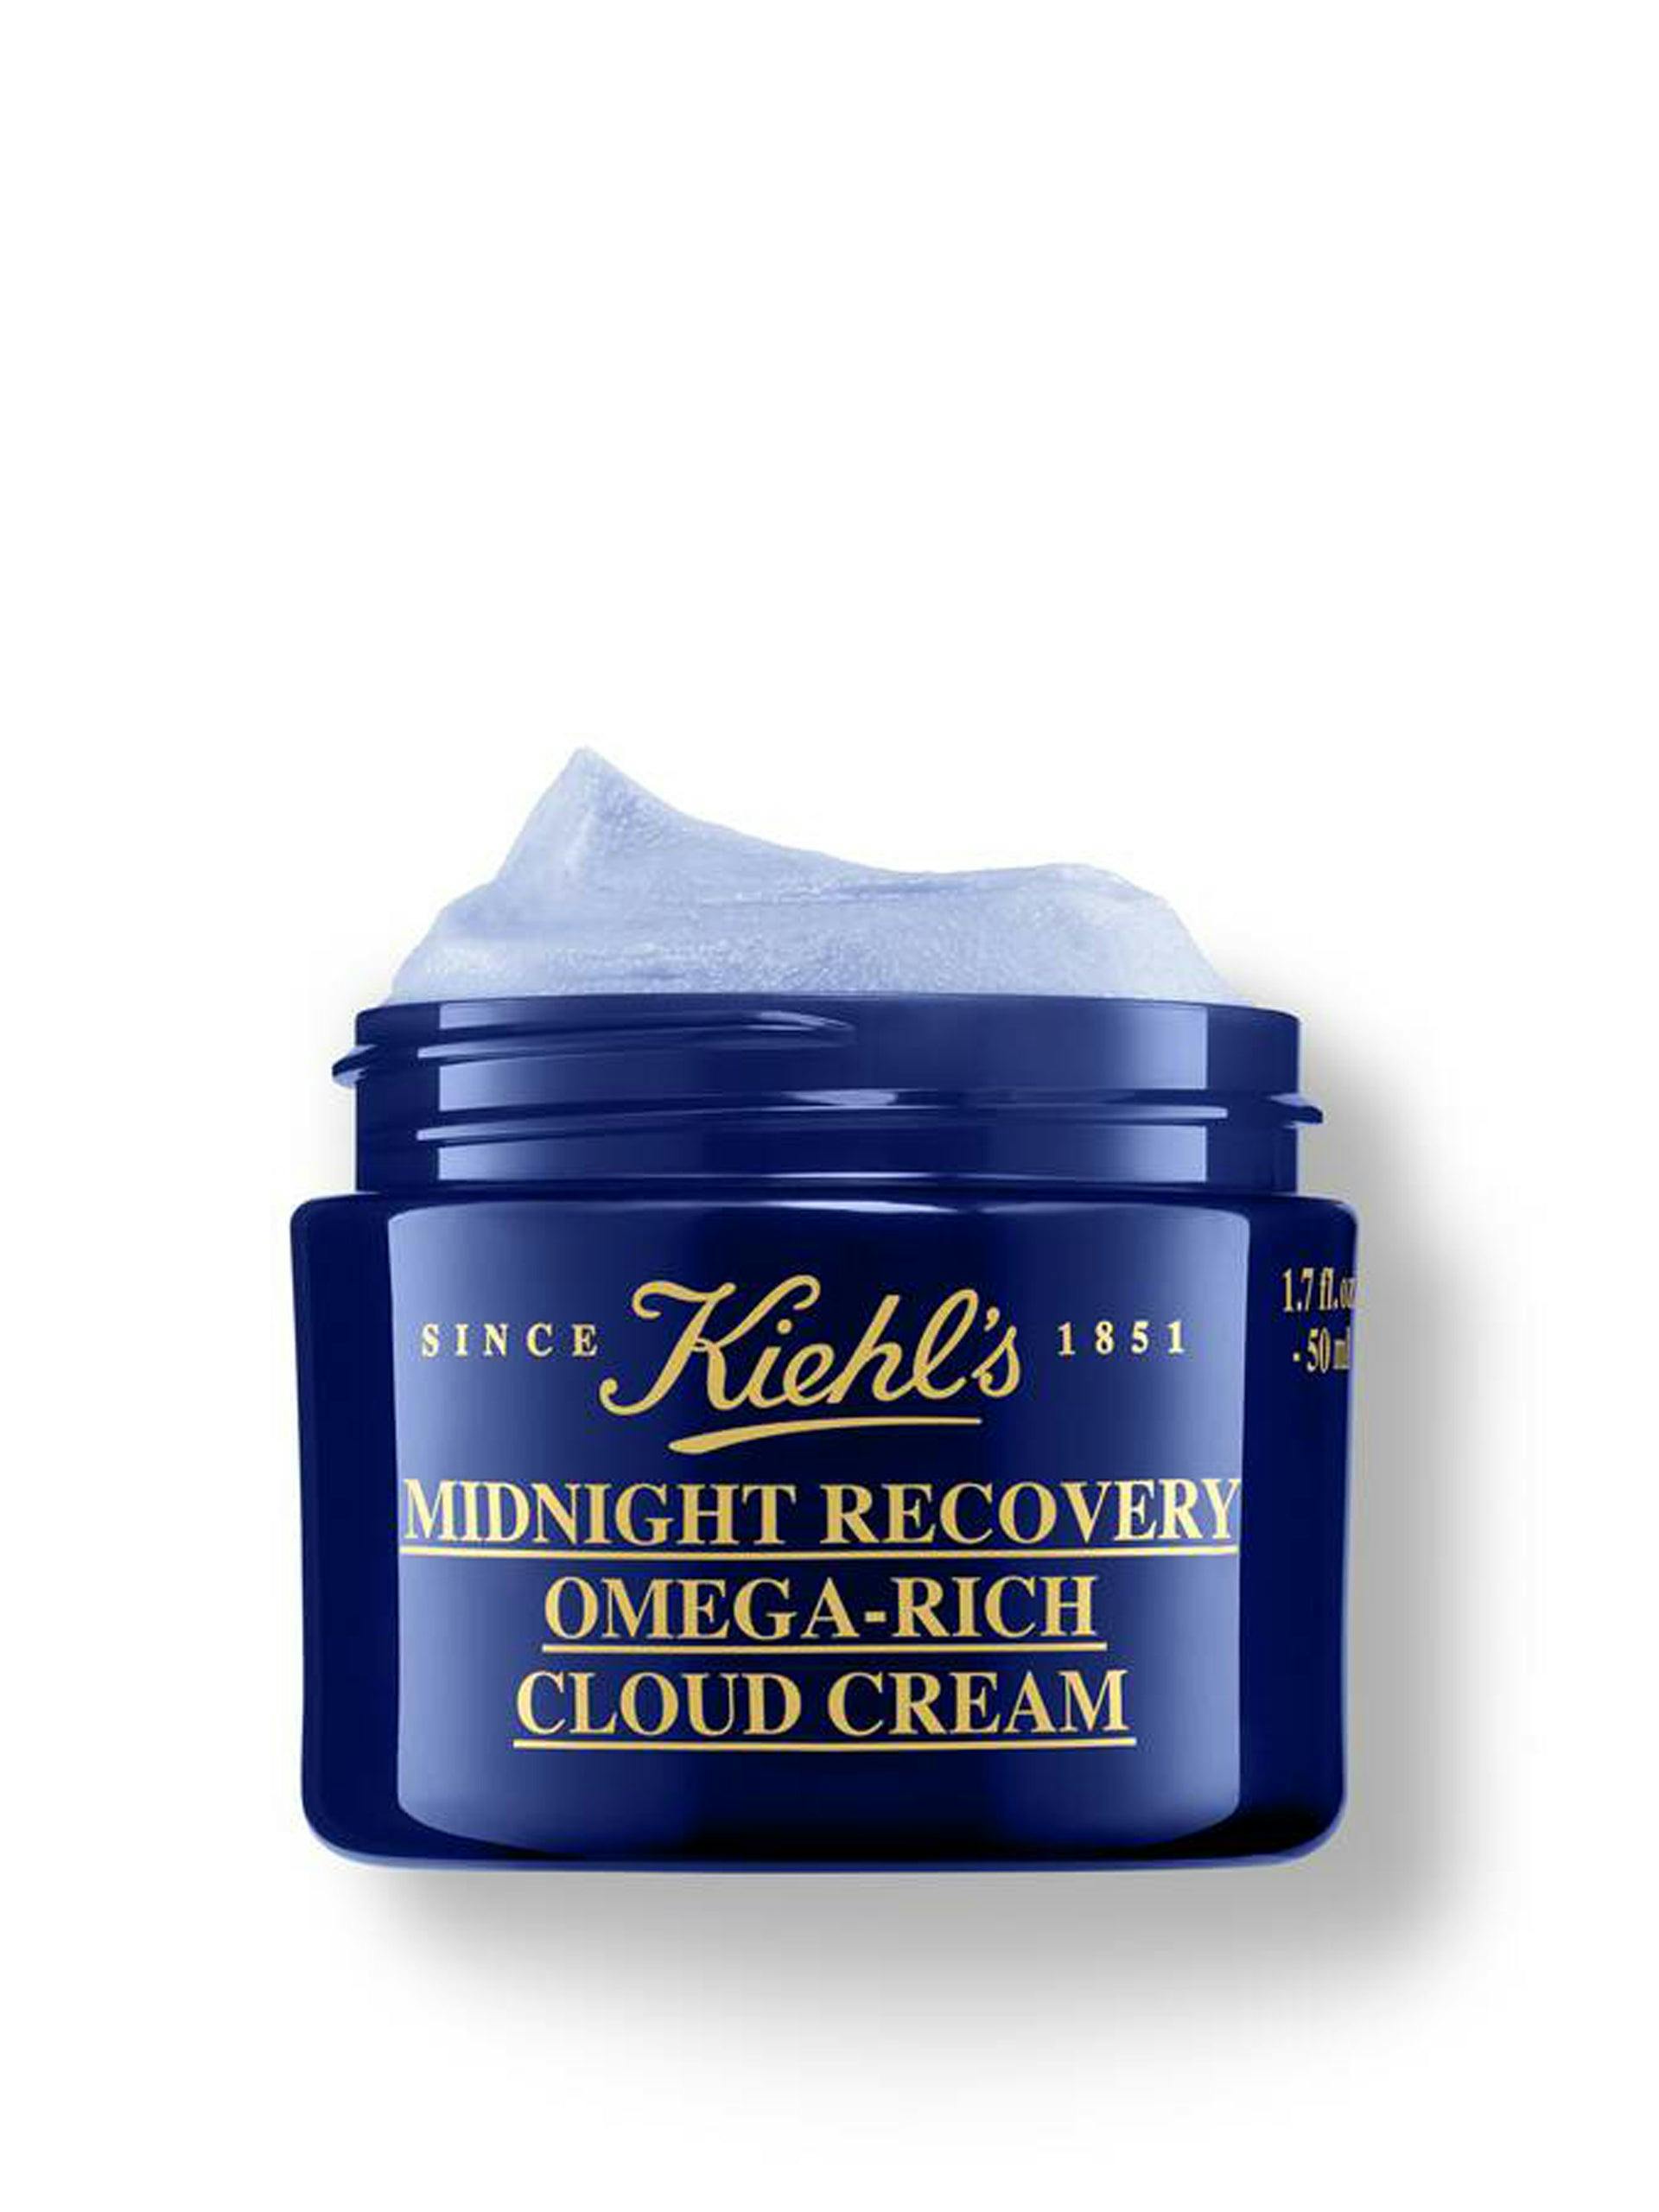 Recovery omega rich night cream